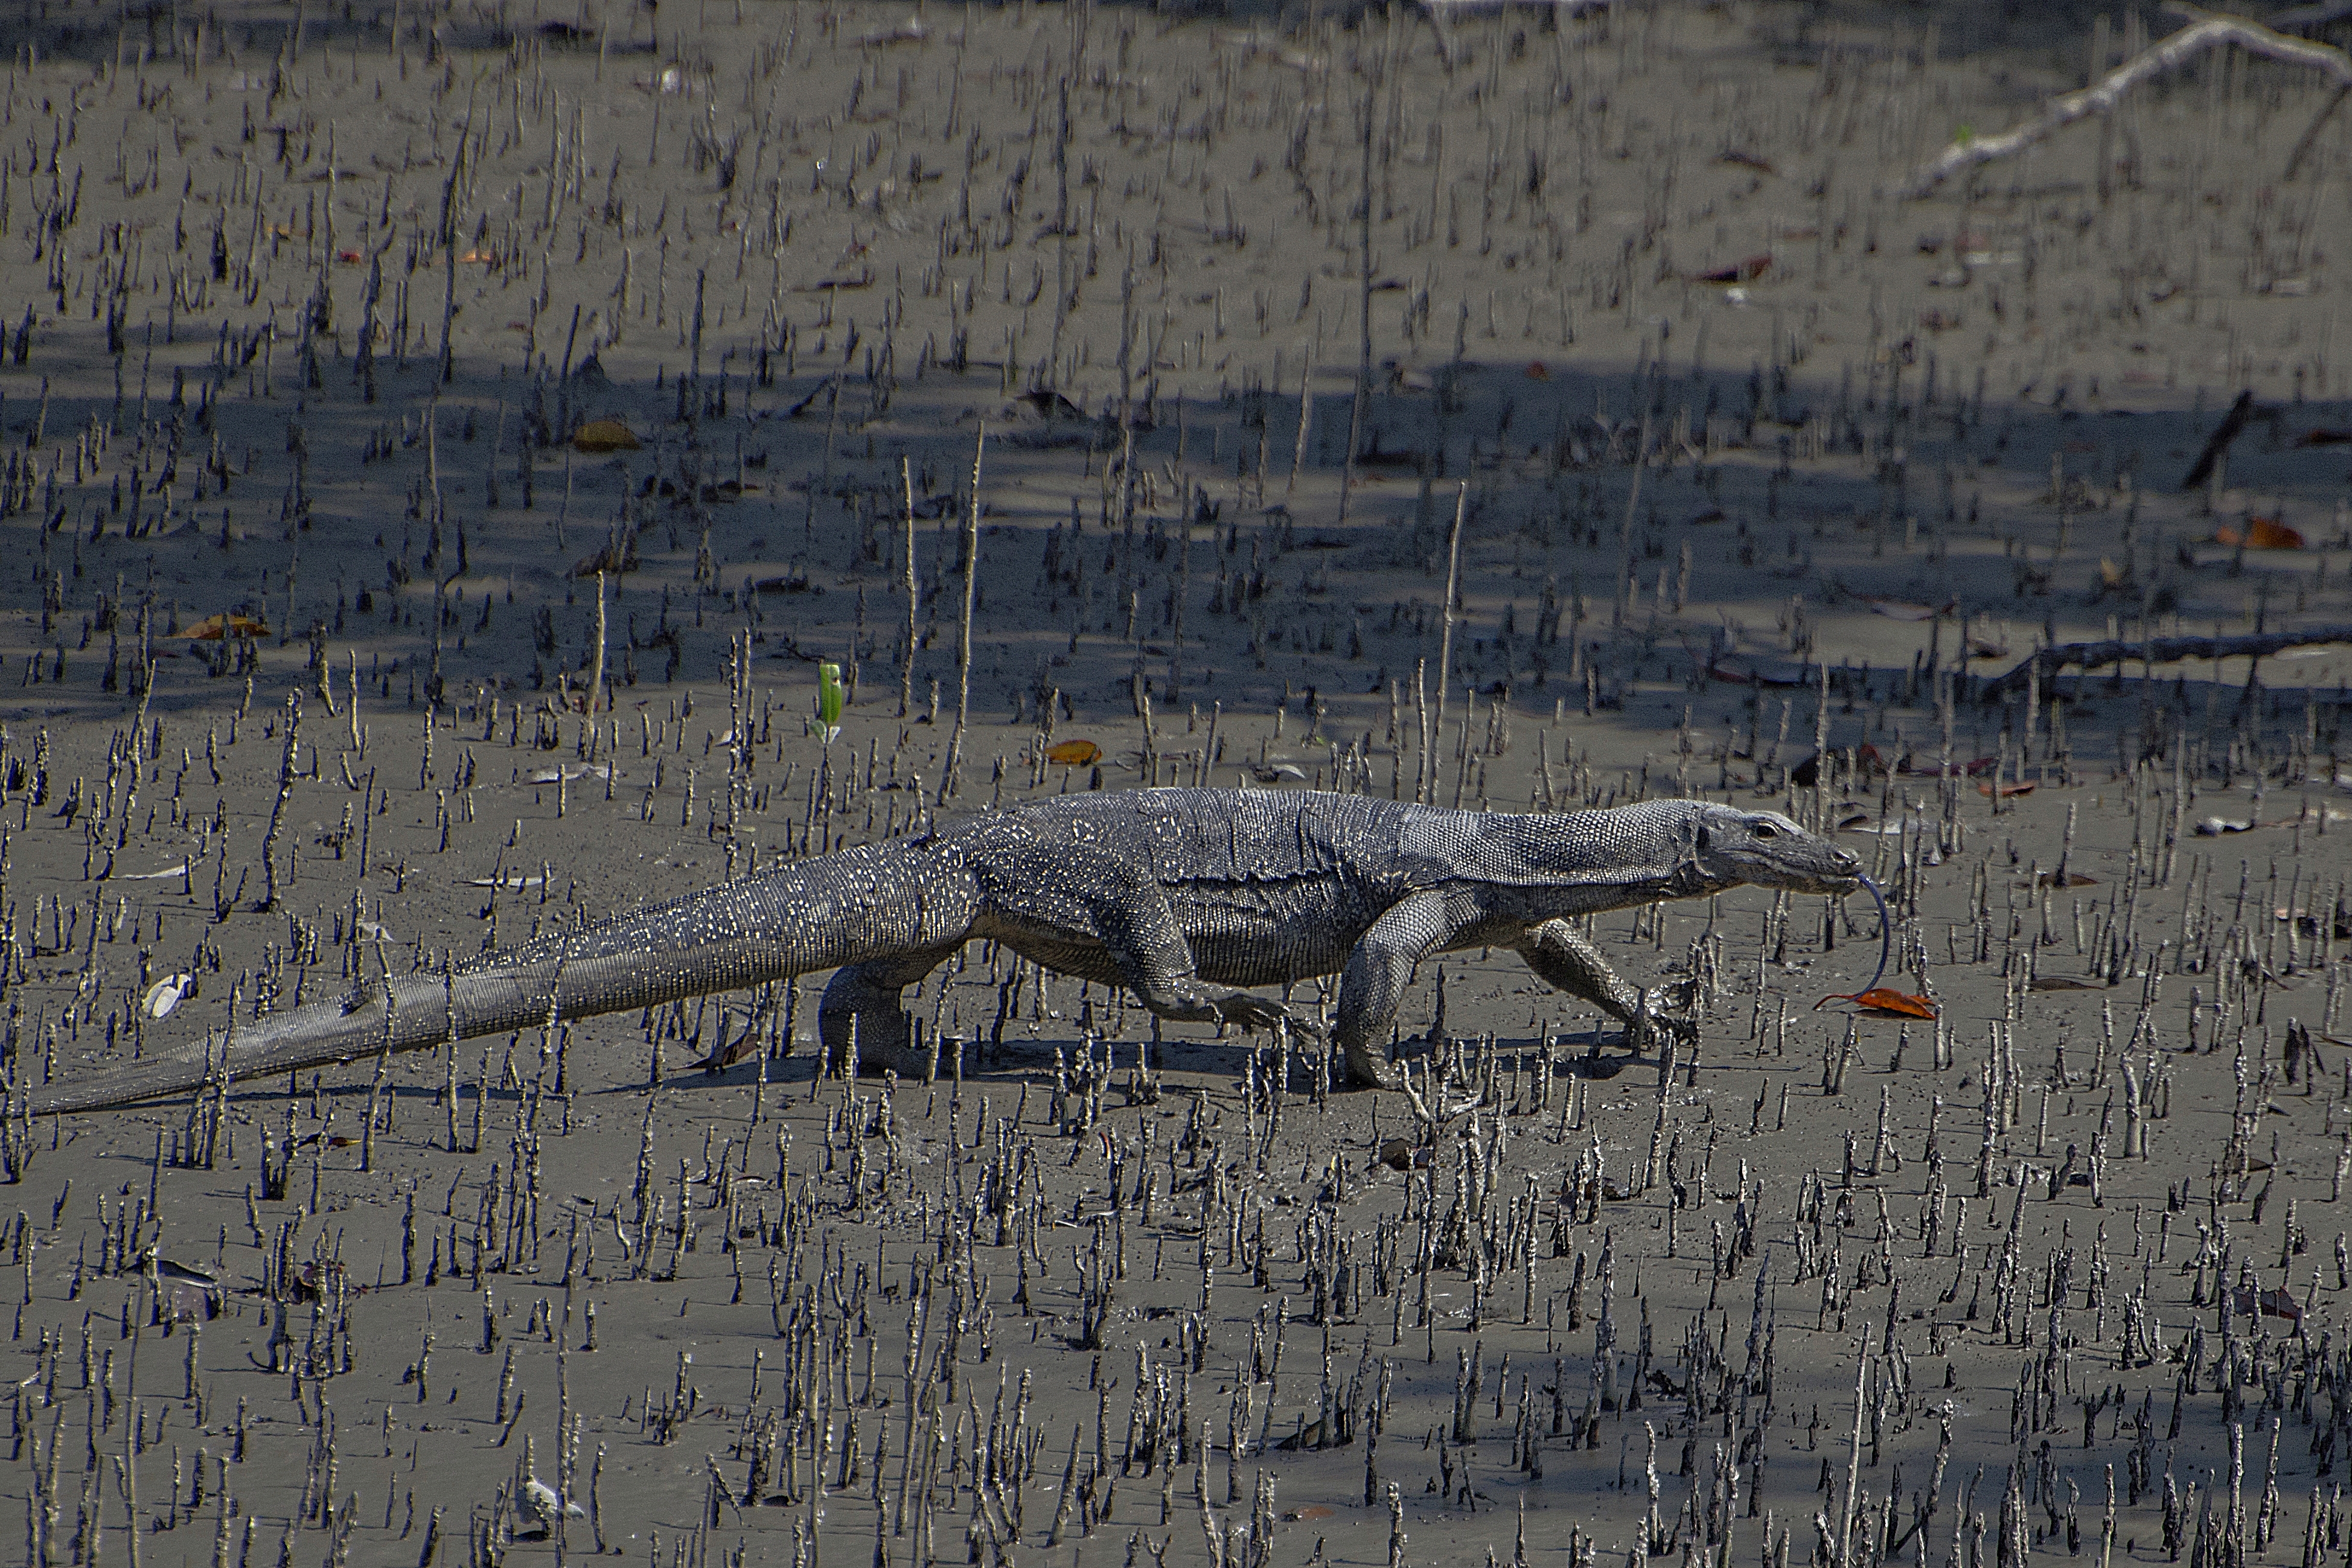 Water monitor lizard of sunerbans